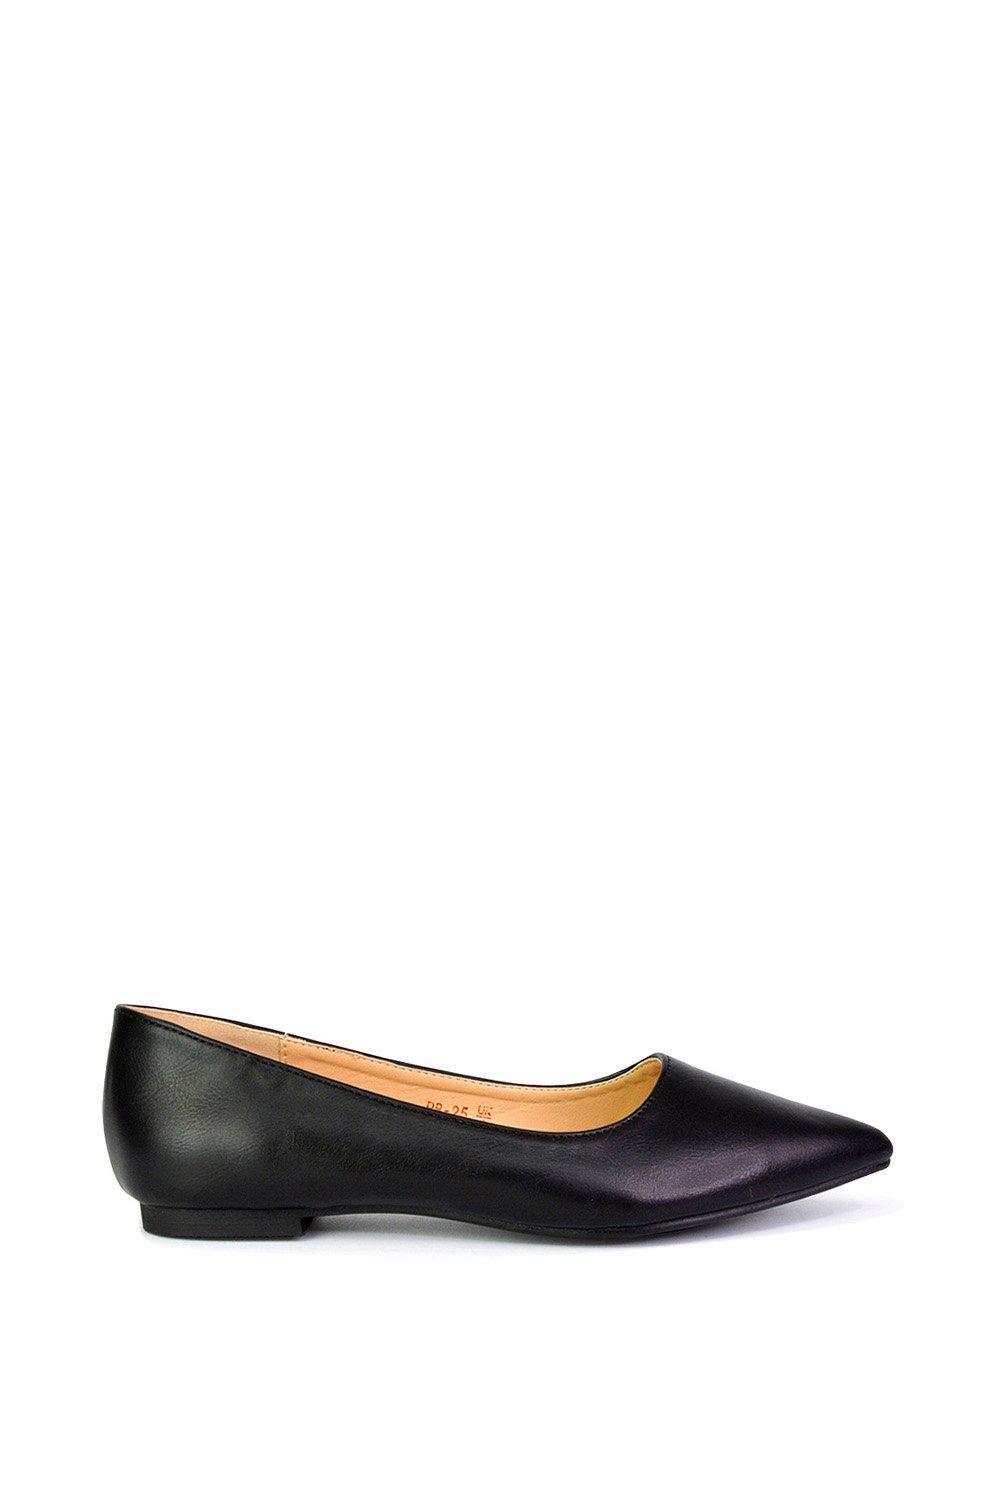 XY London Women's 'Bubbles' Pointed Toe Slip on Flat Ballerina Pump Shoes|Size: 5|black